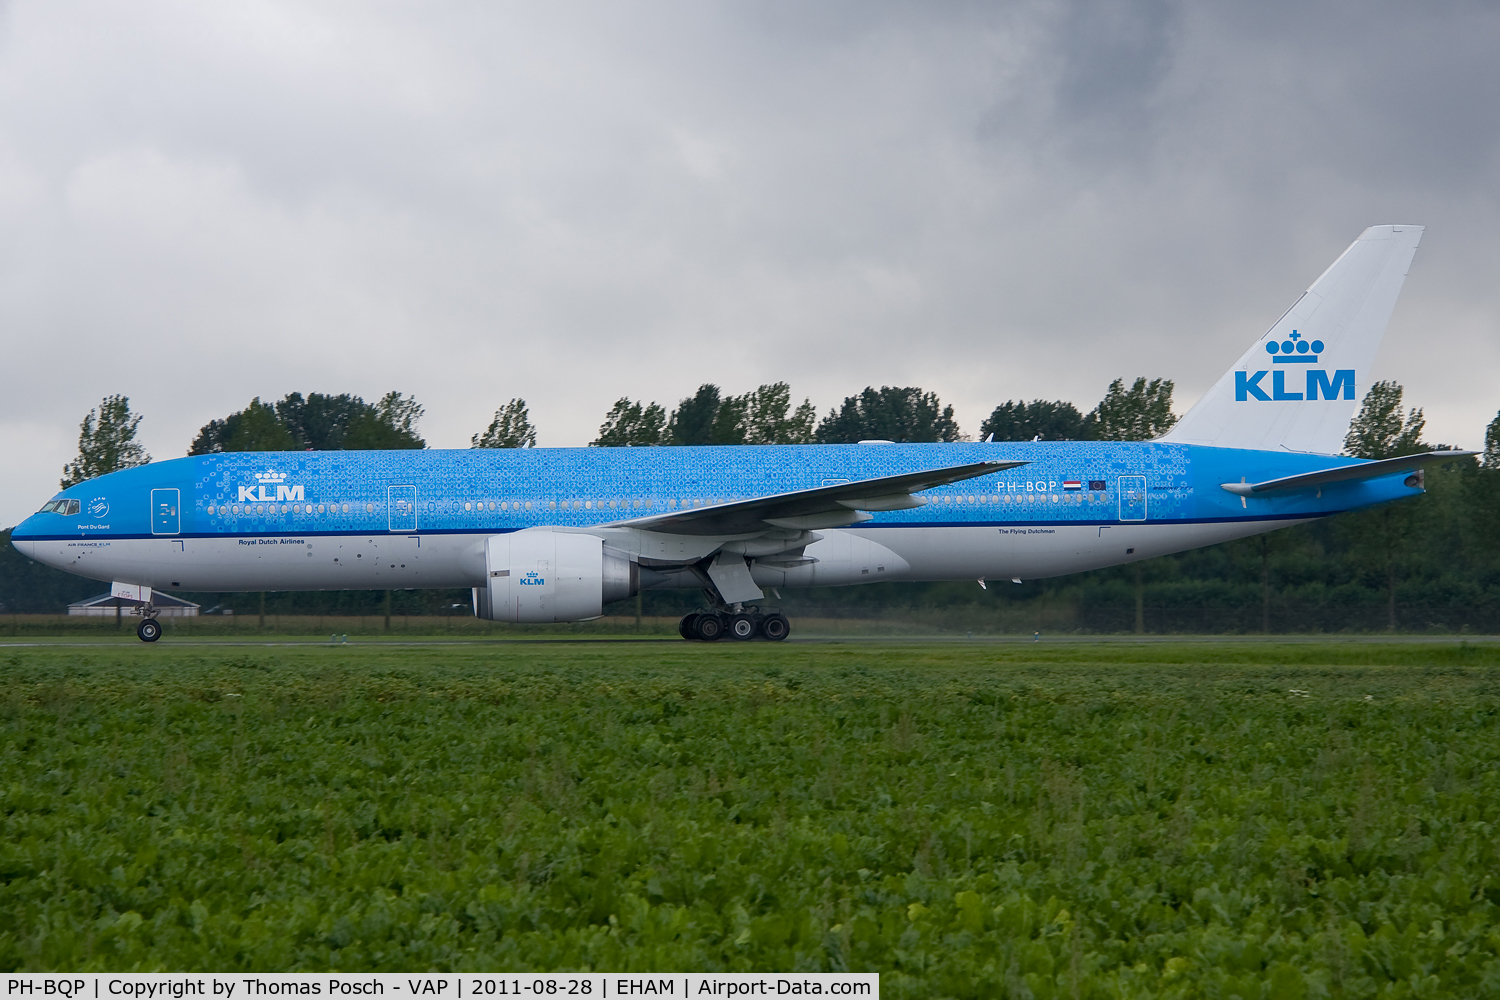 PH-BQP, 2007 Boeing 777-206/ER C/N 32721, KLM - Royal Dutch Airlines